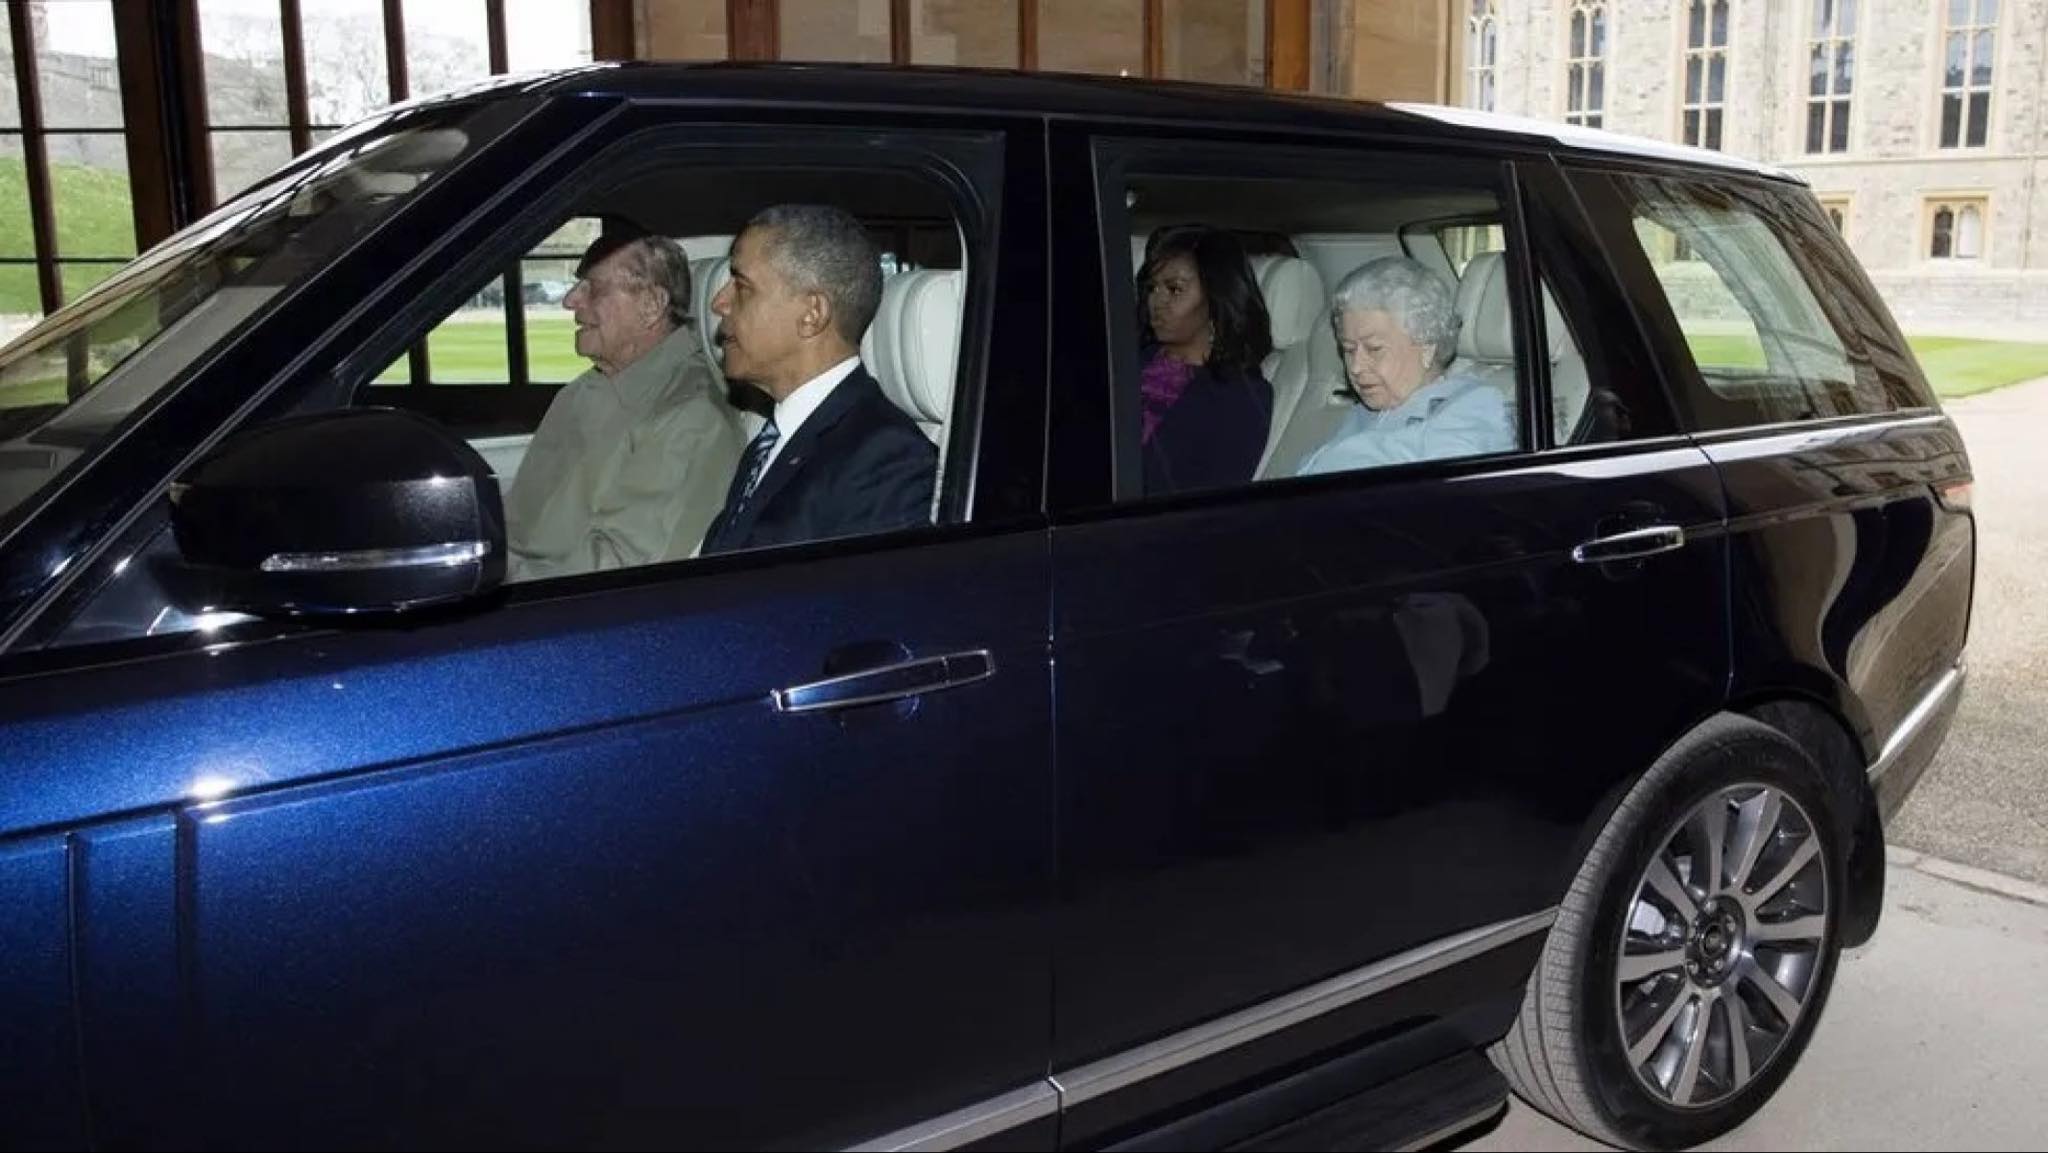 Maraqlı tarixə malik Kraliça Elizabetin eksklüziv “Range Rover”i satışa çıxarıldı - FOTO